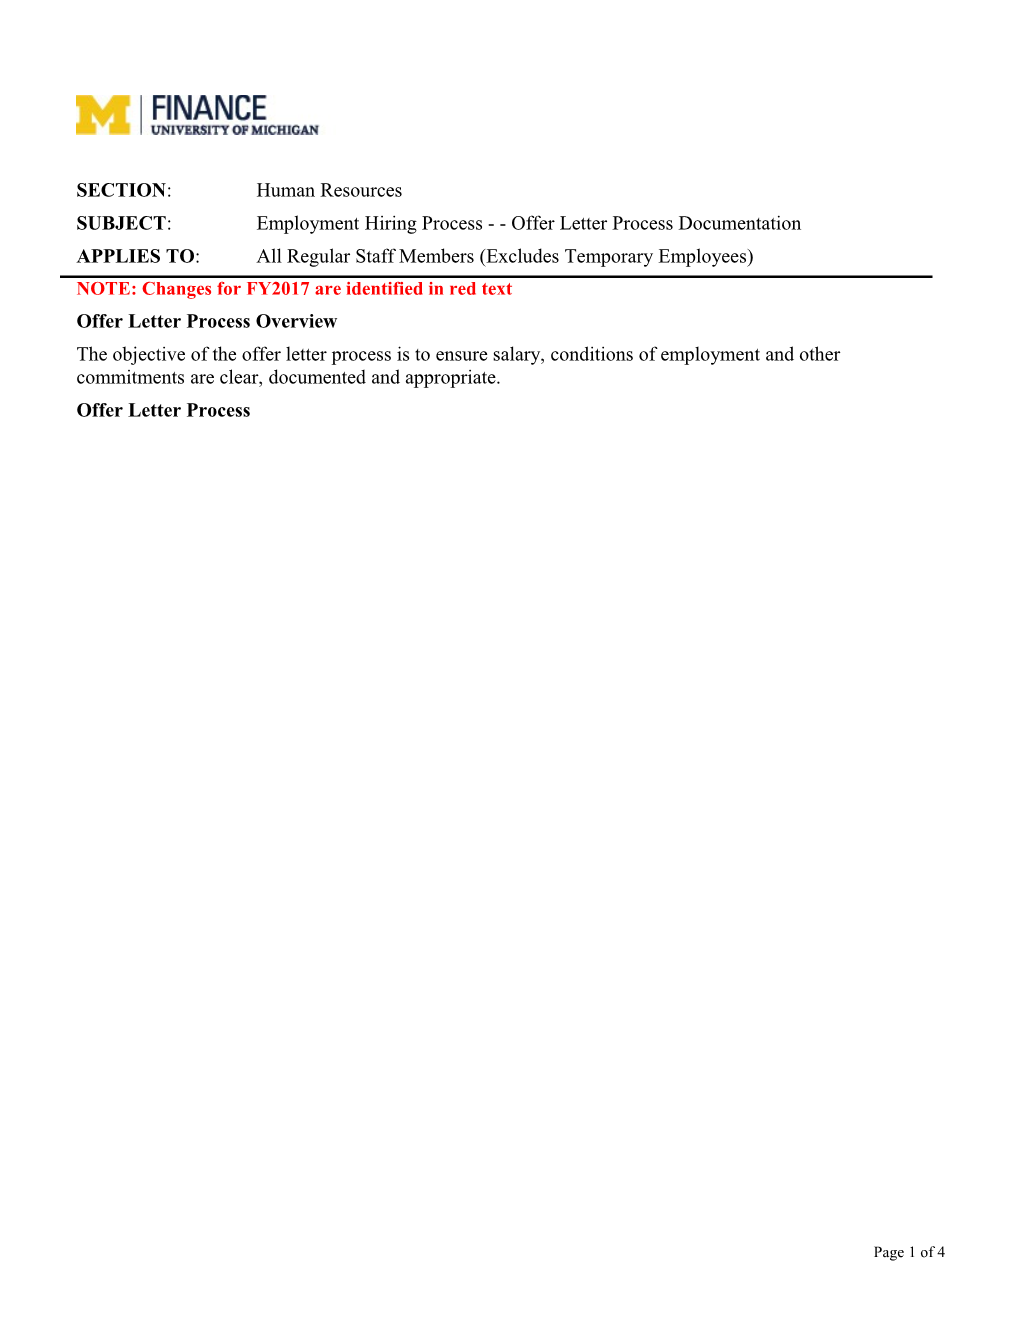 SUBJECT:Employment Hiring Process - - Offer Letter Process Documentation